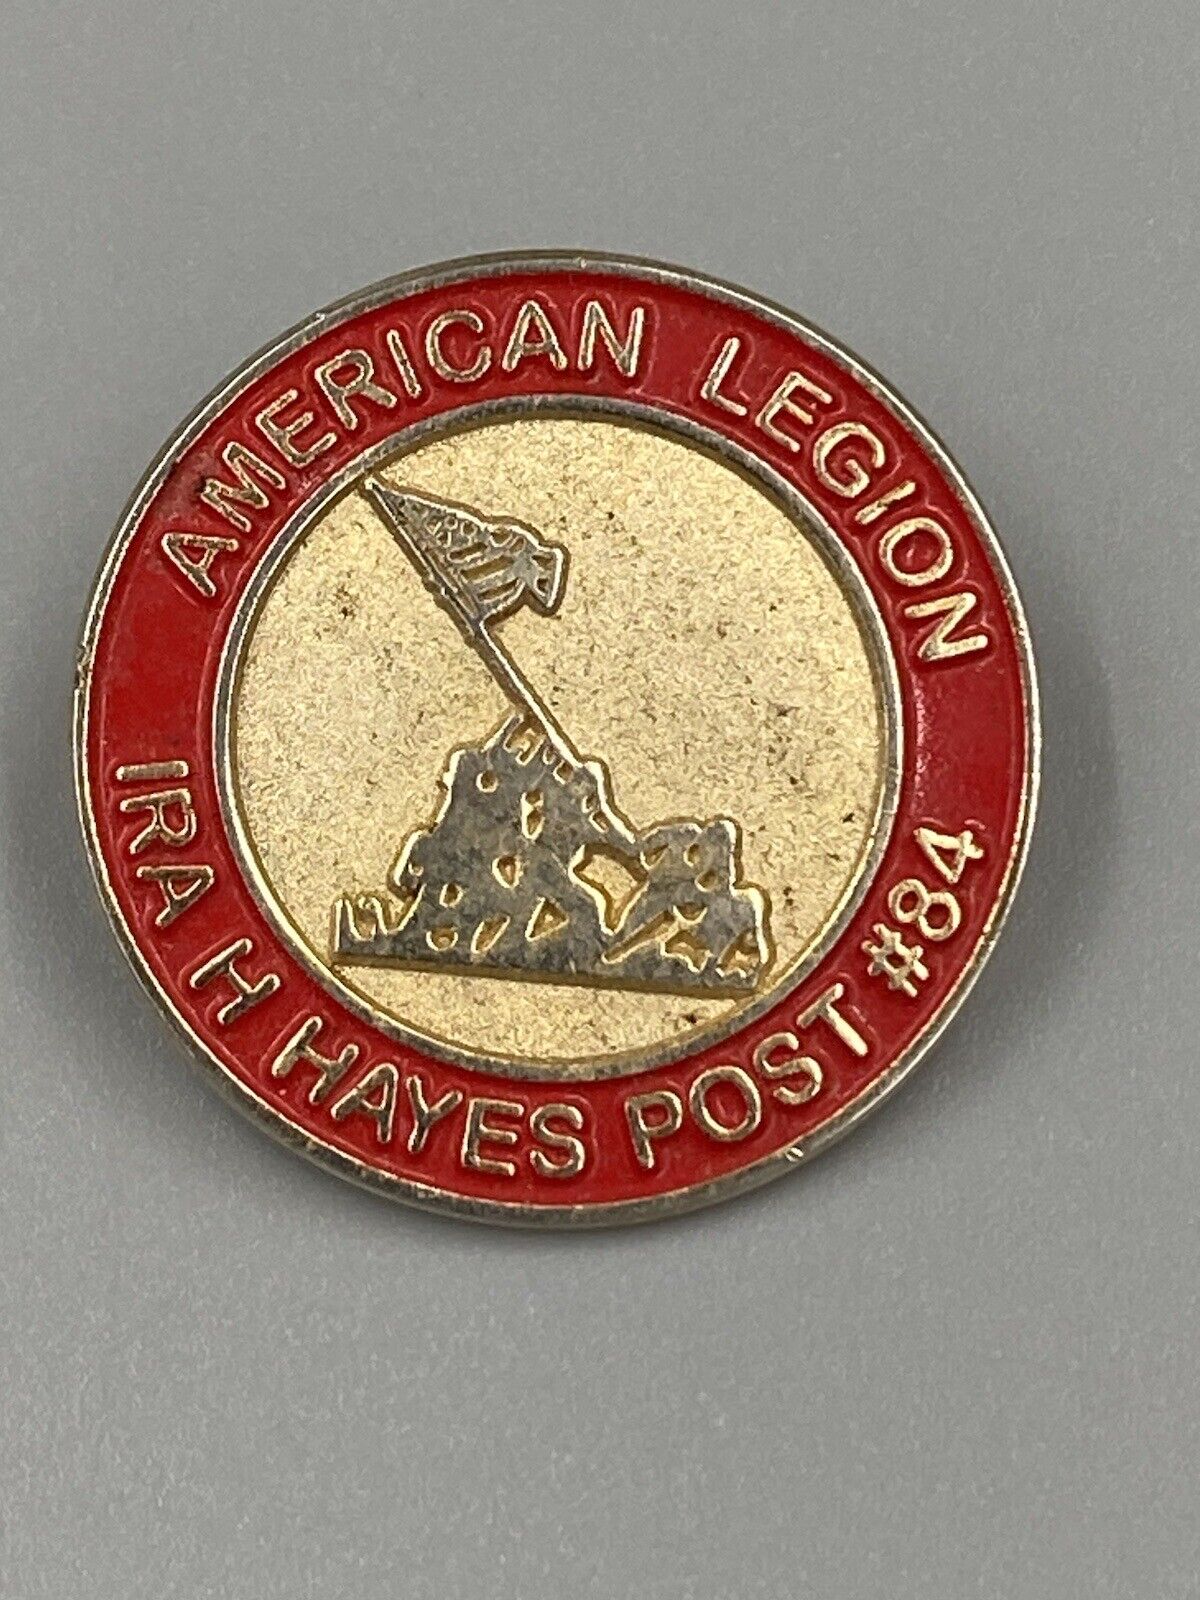 American Legion IRA H HAYES Post # 84 Lapel Pin